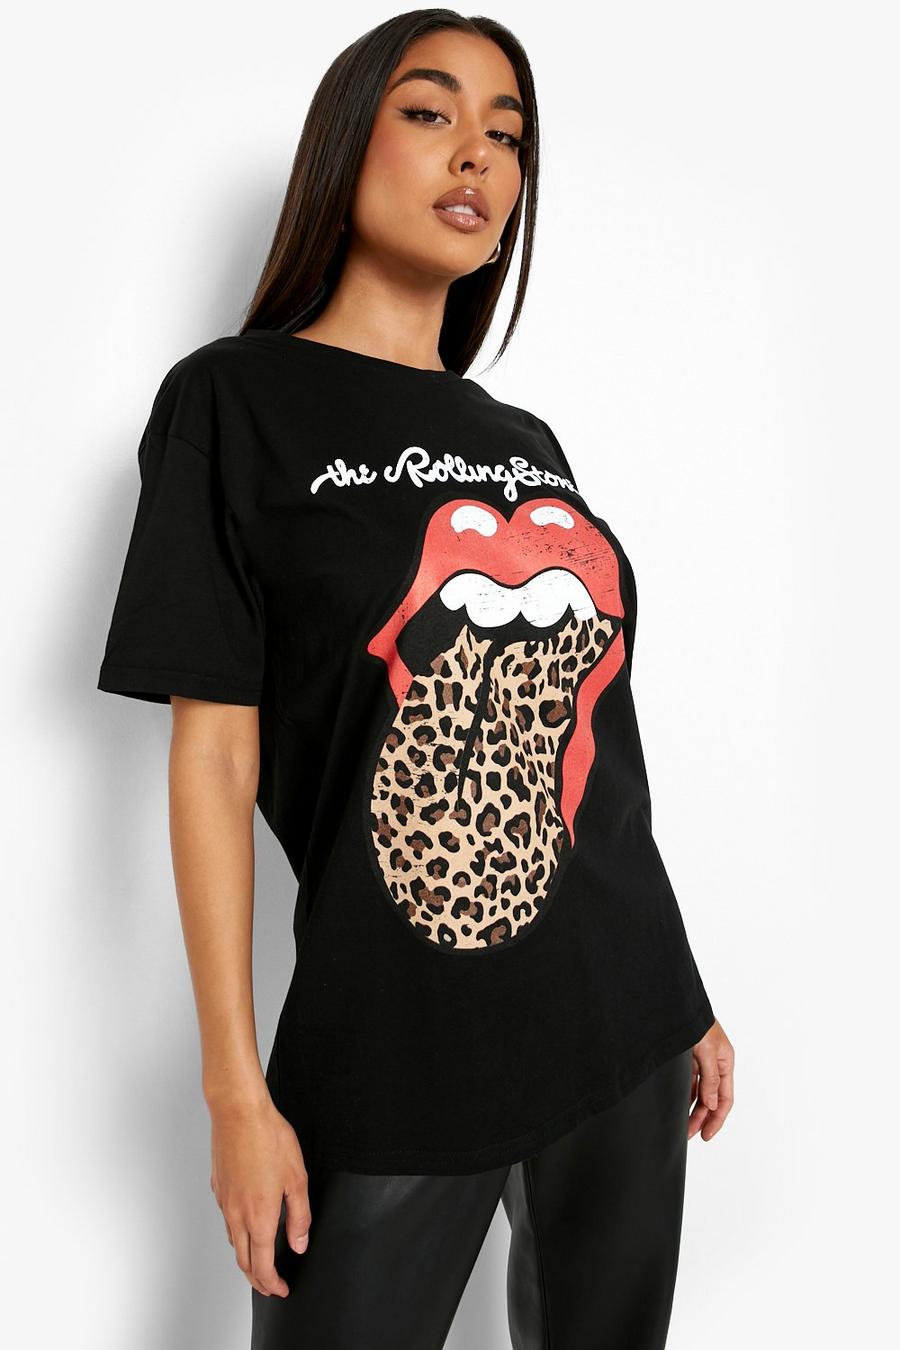 The Rolling Stones - Retro 70s Vibe Unisex Small T-Shirt - Black